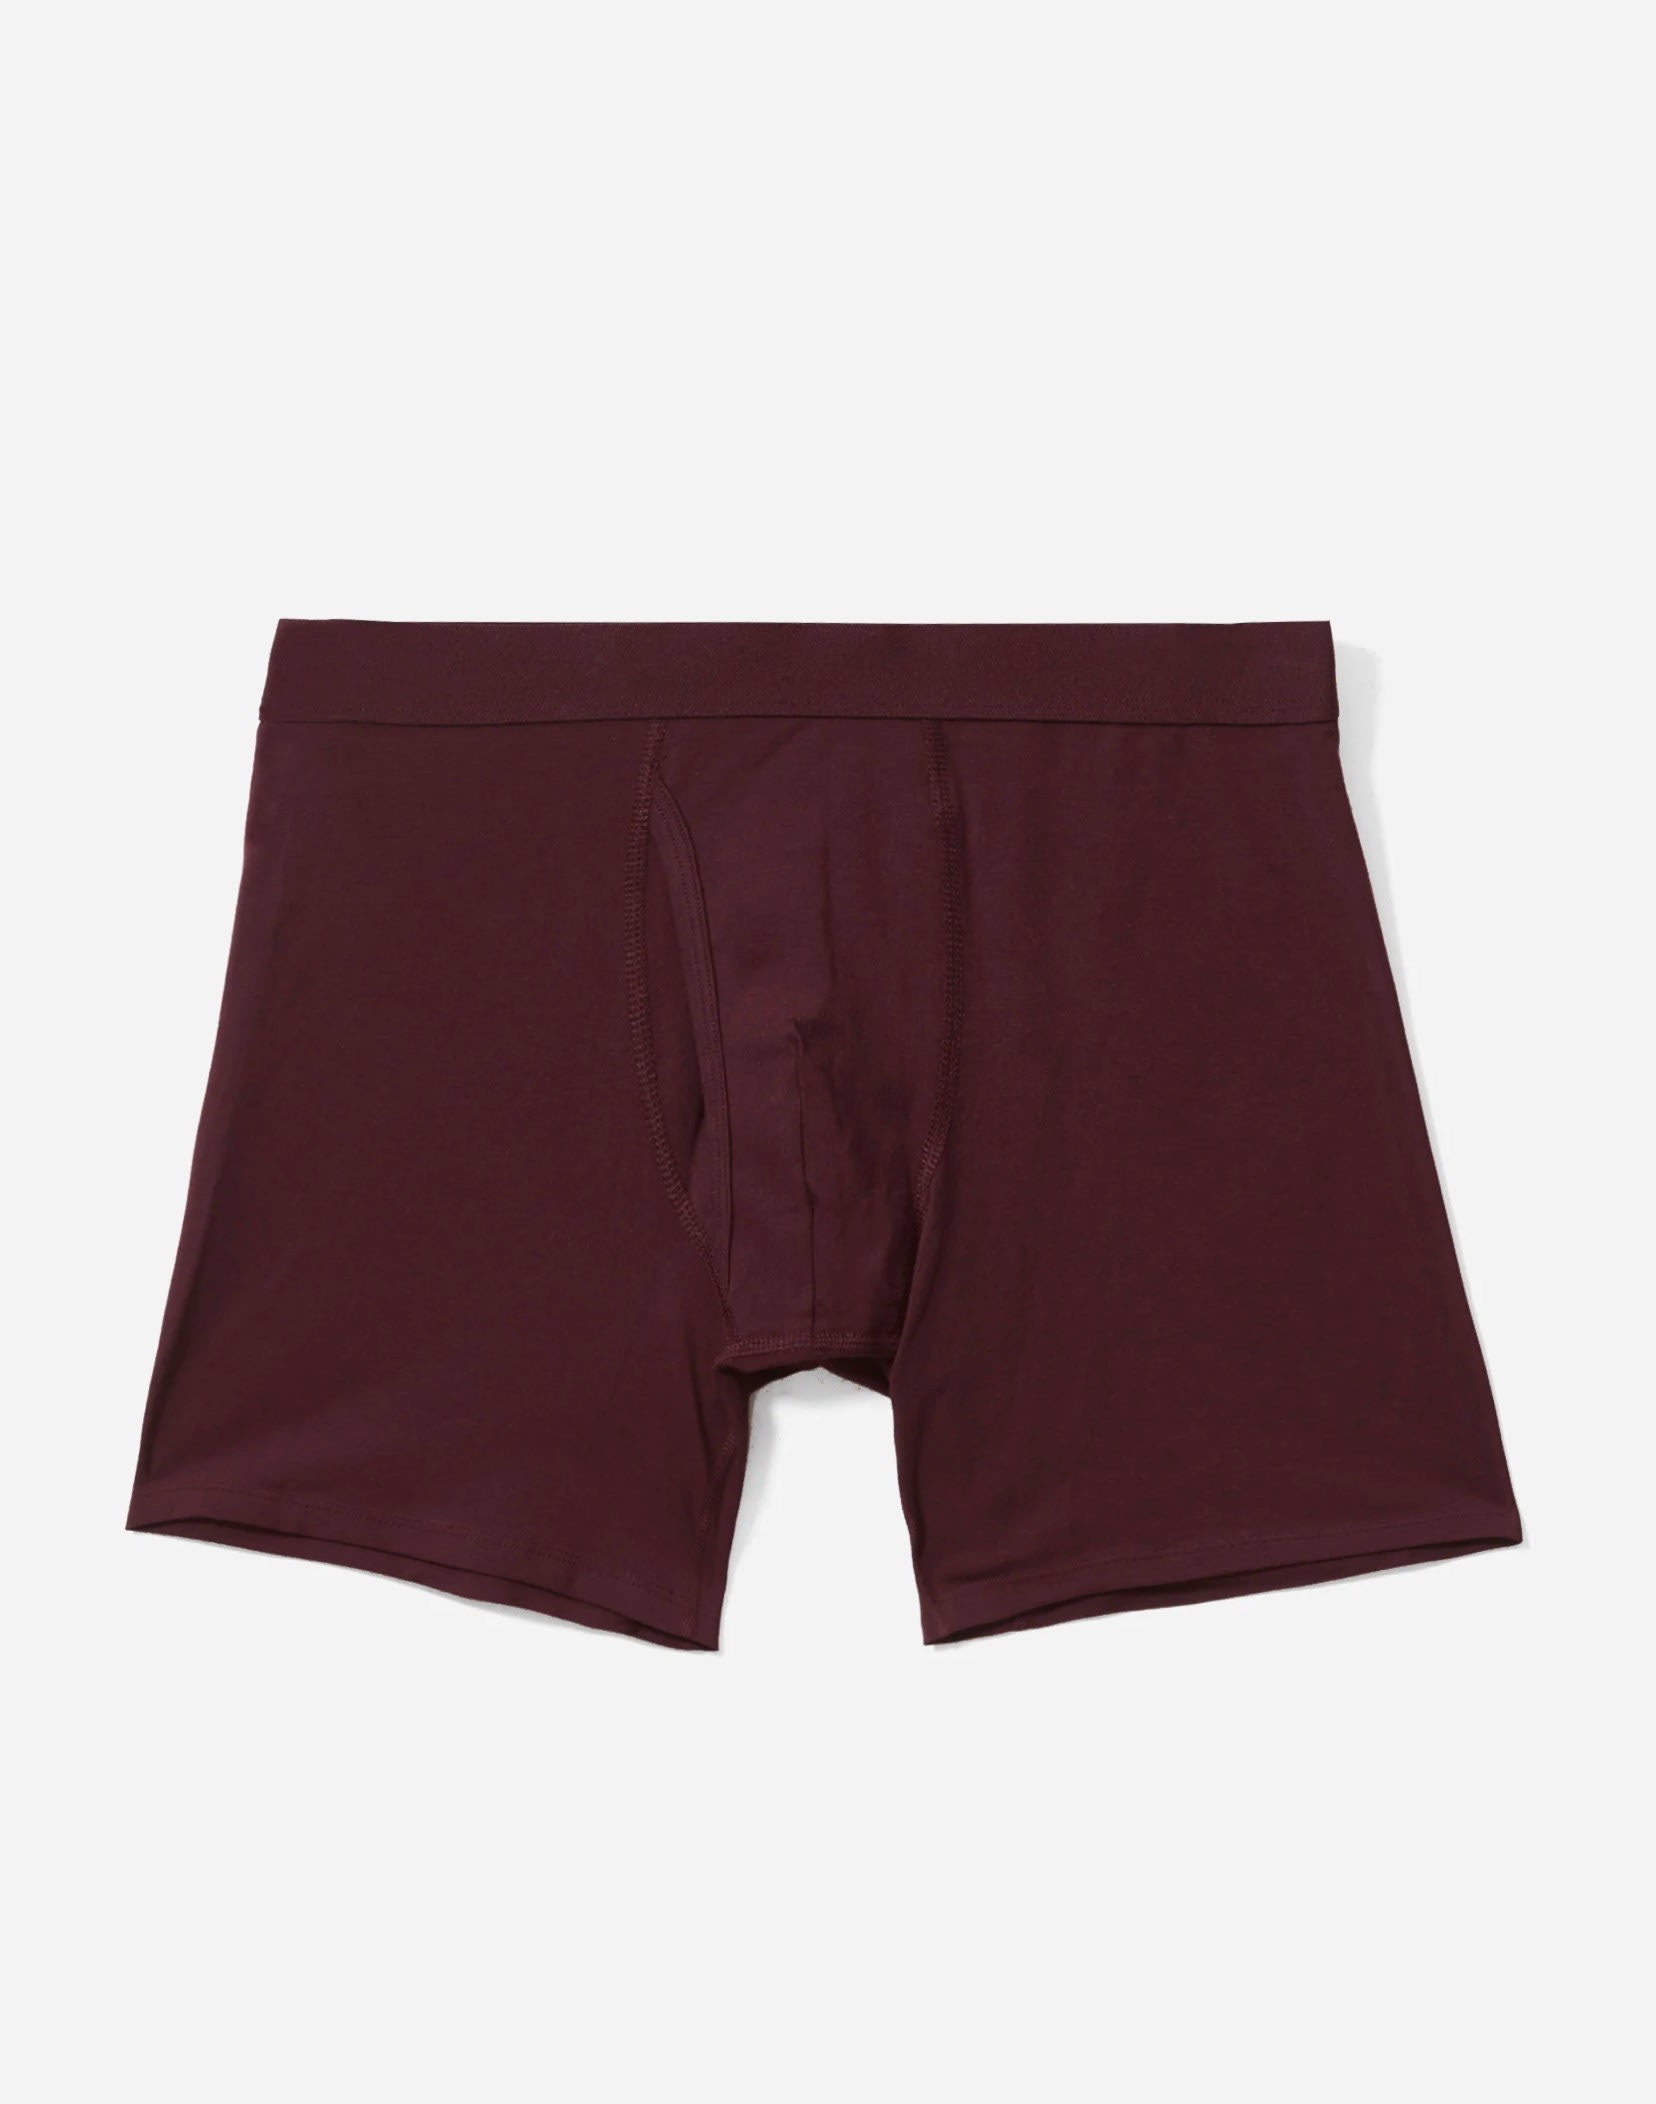 Shop Men's Underwear - Cotton Boxer Briefs & More | Everlane